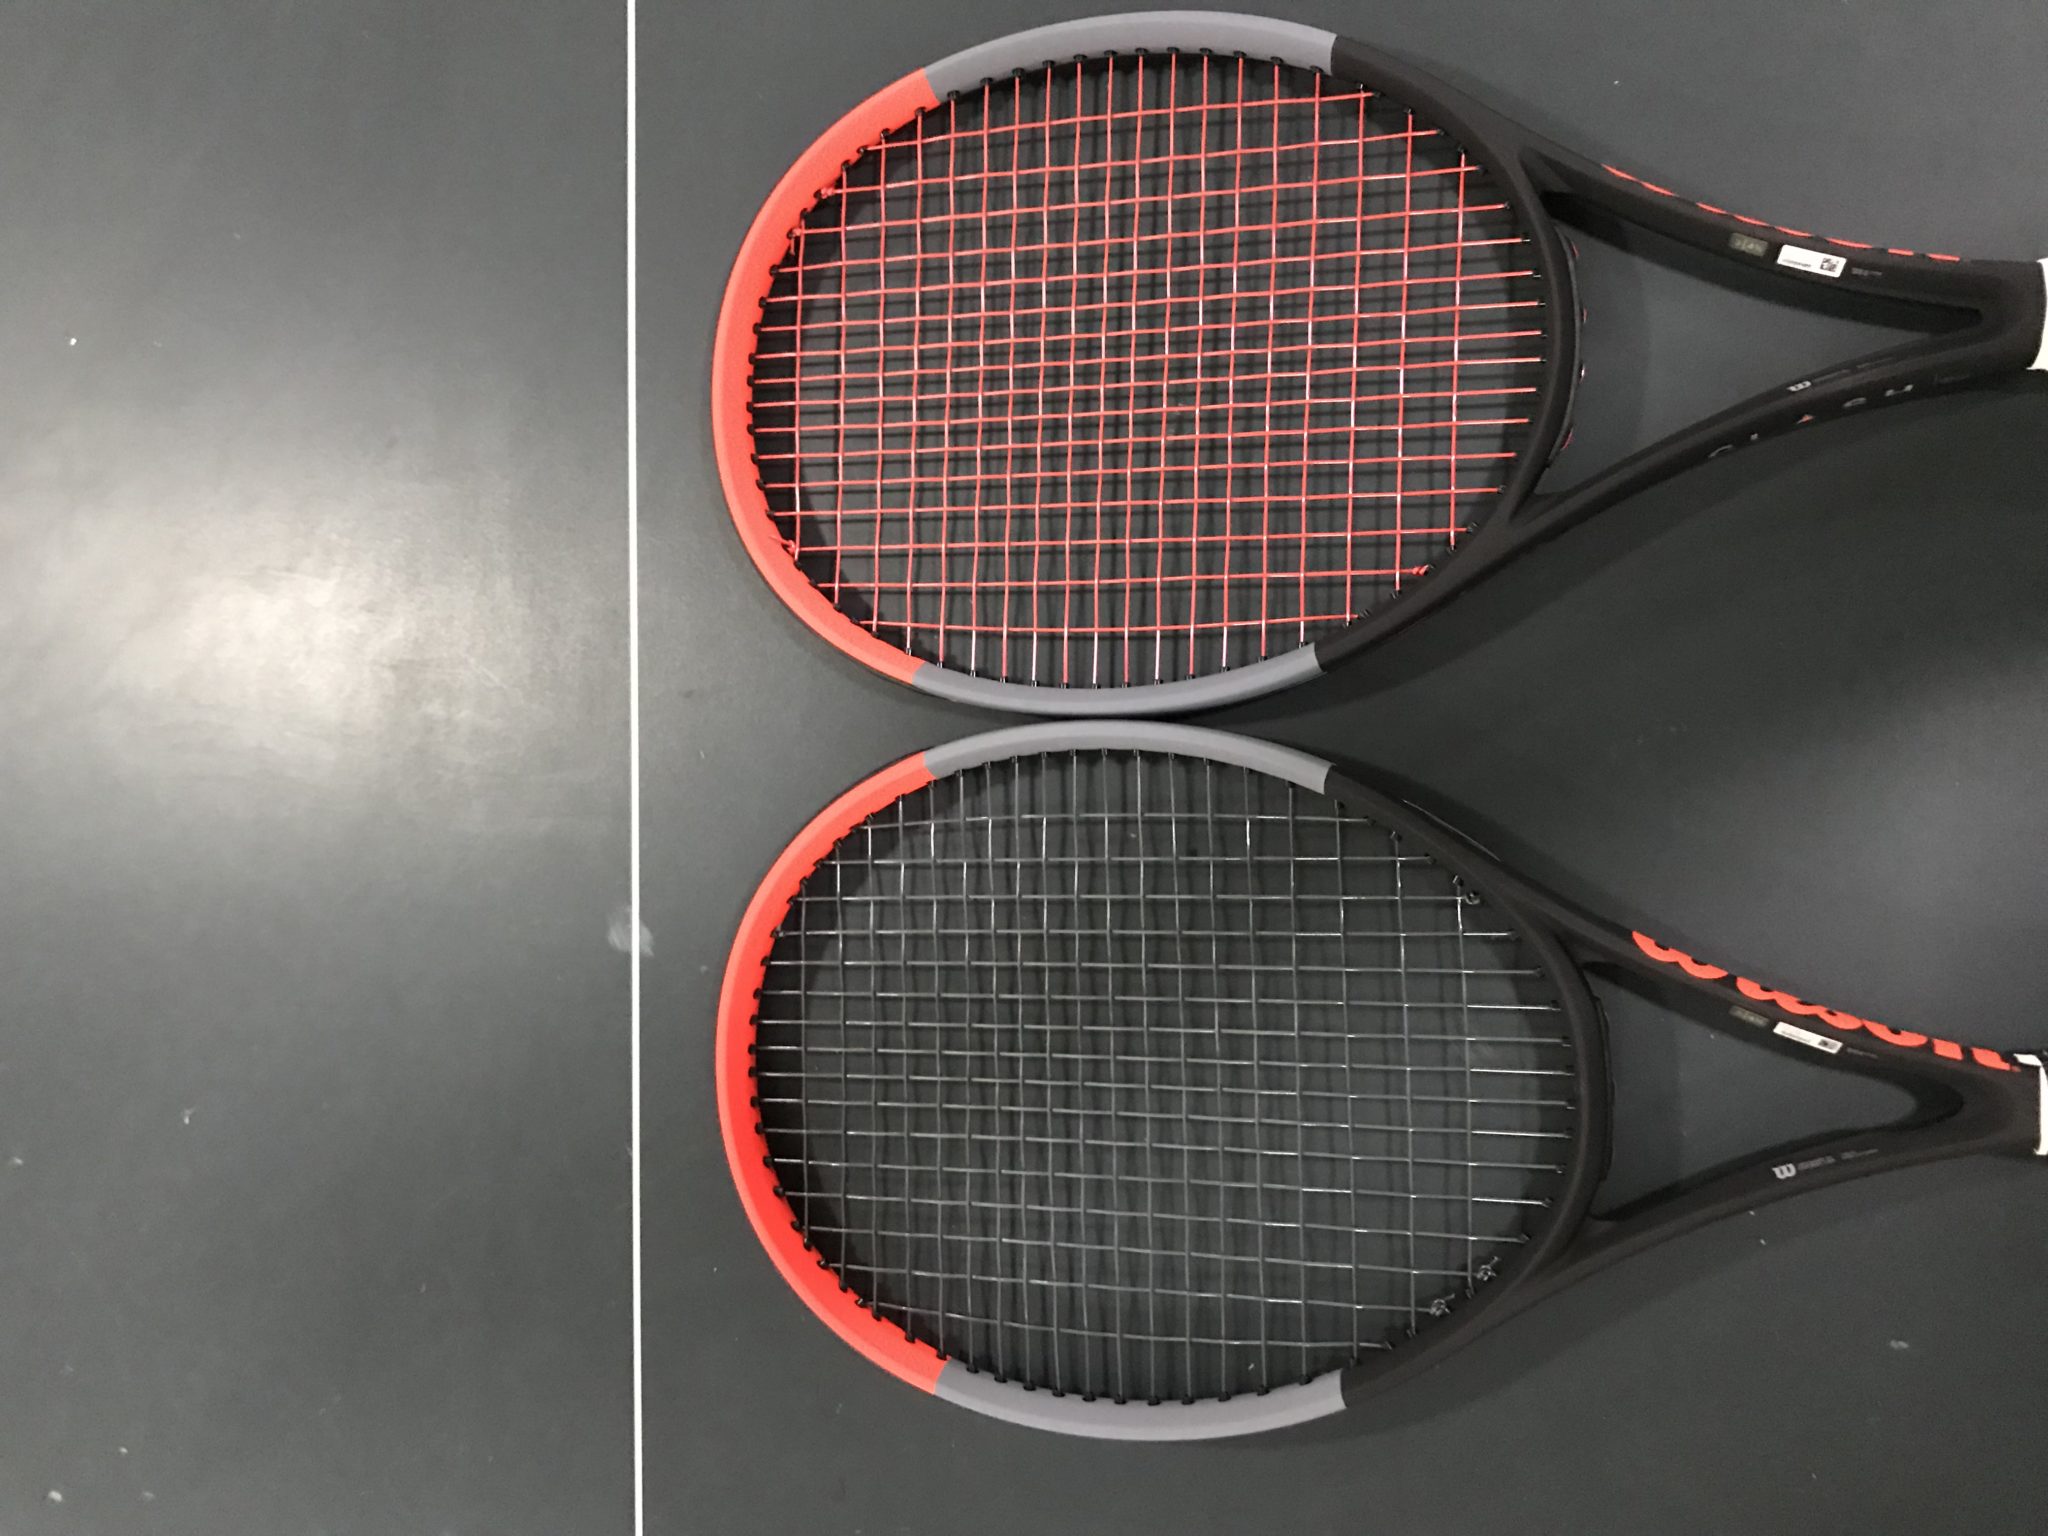 Wilson Clash 98 Tennis Racquet 